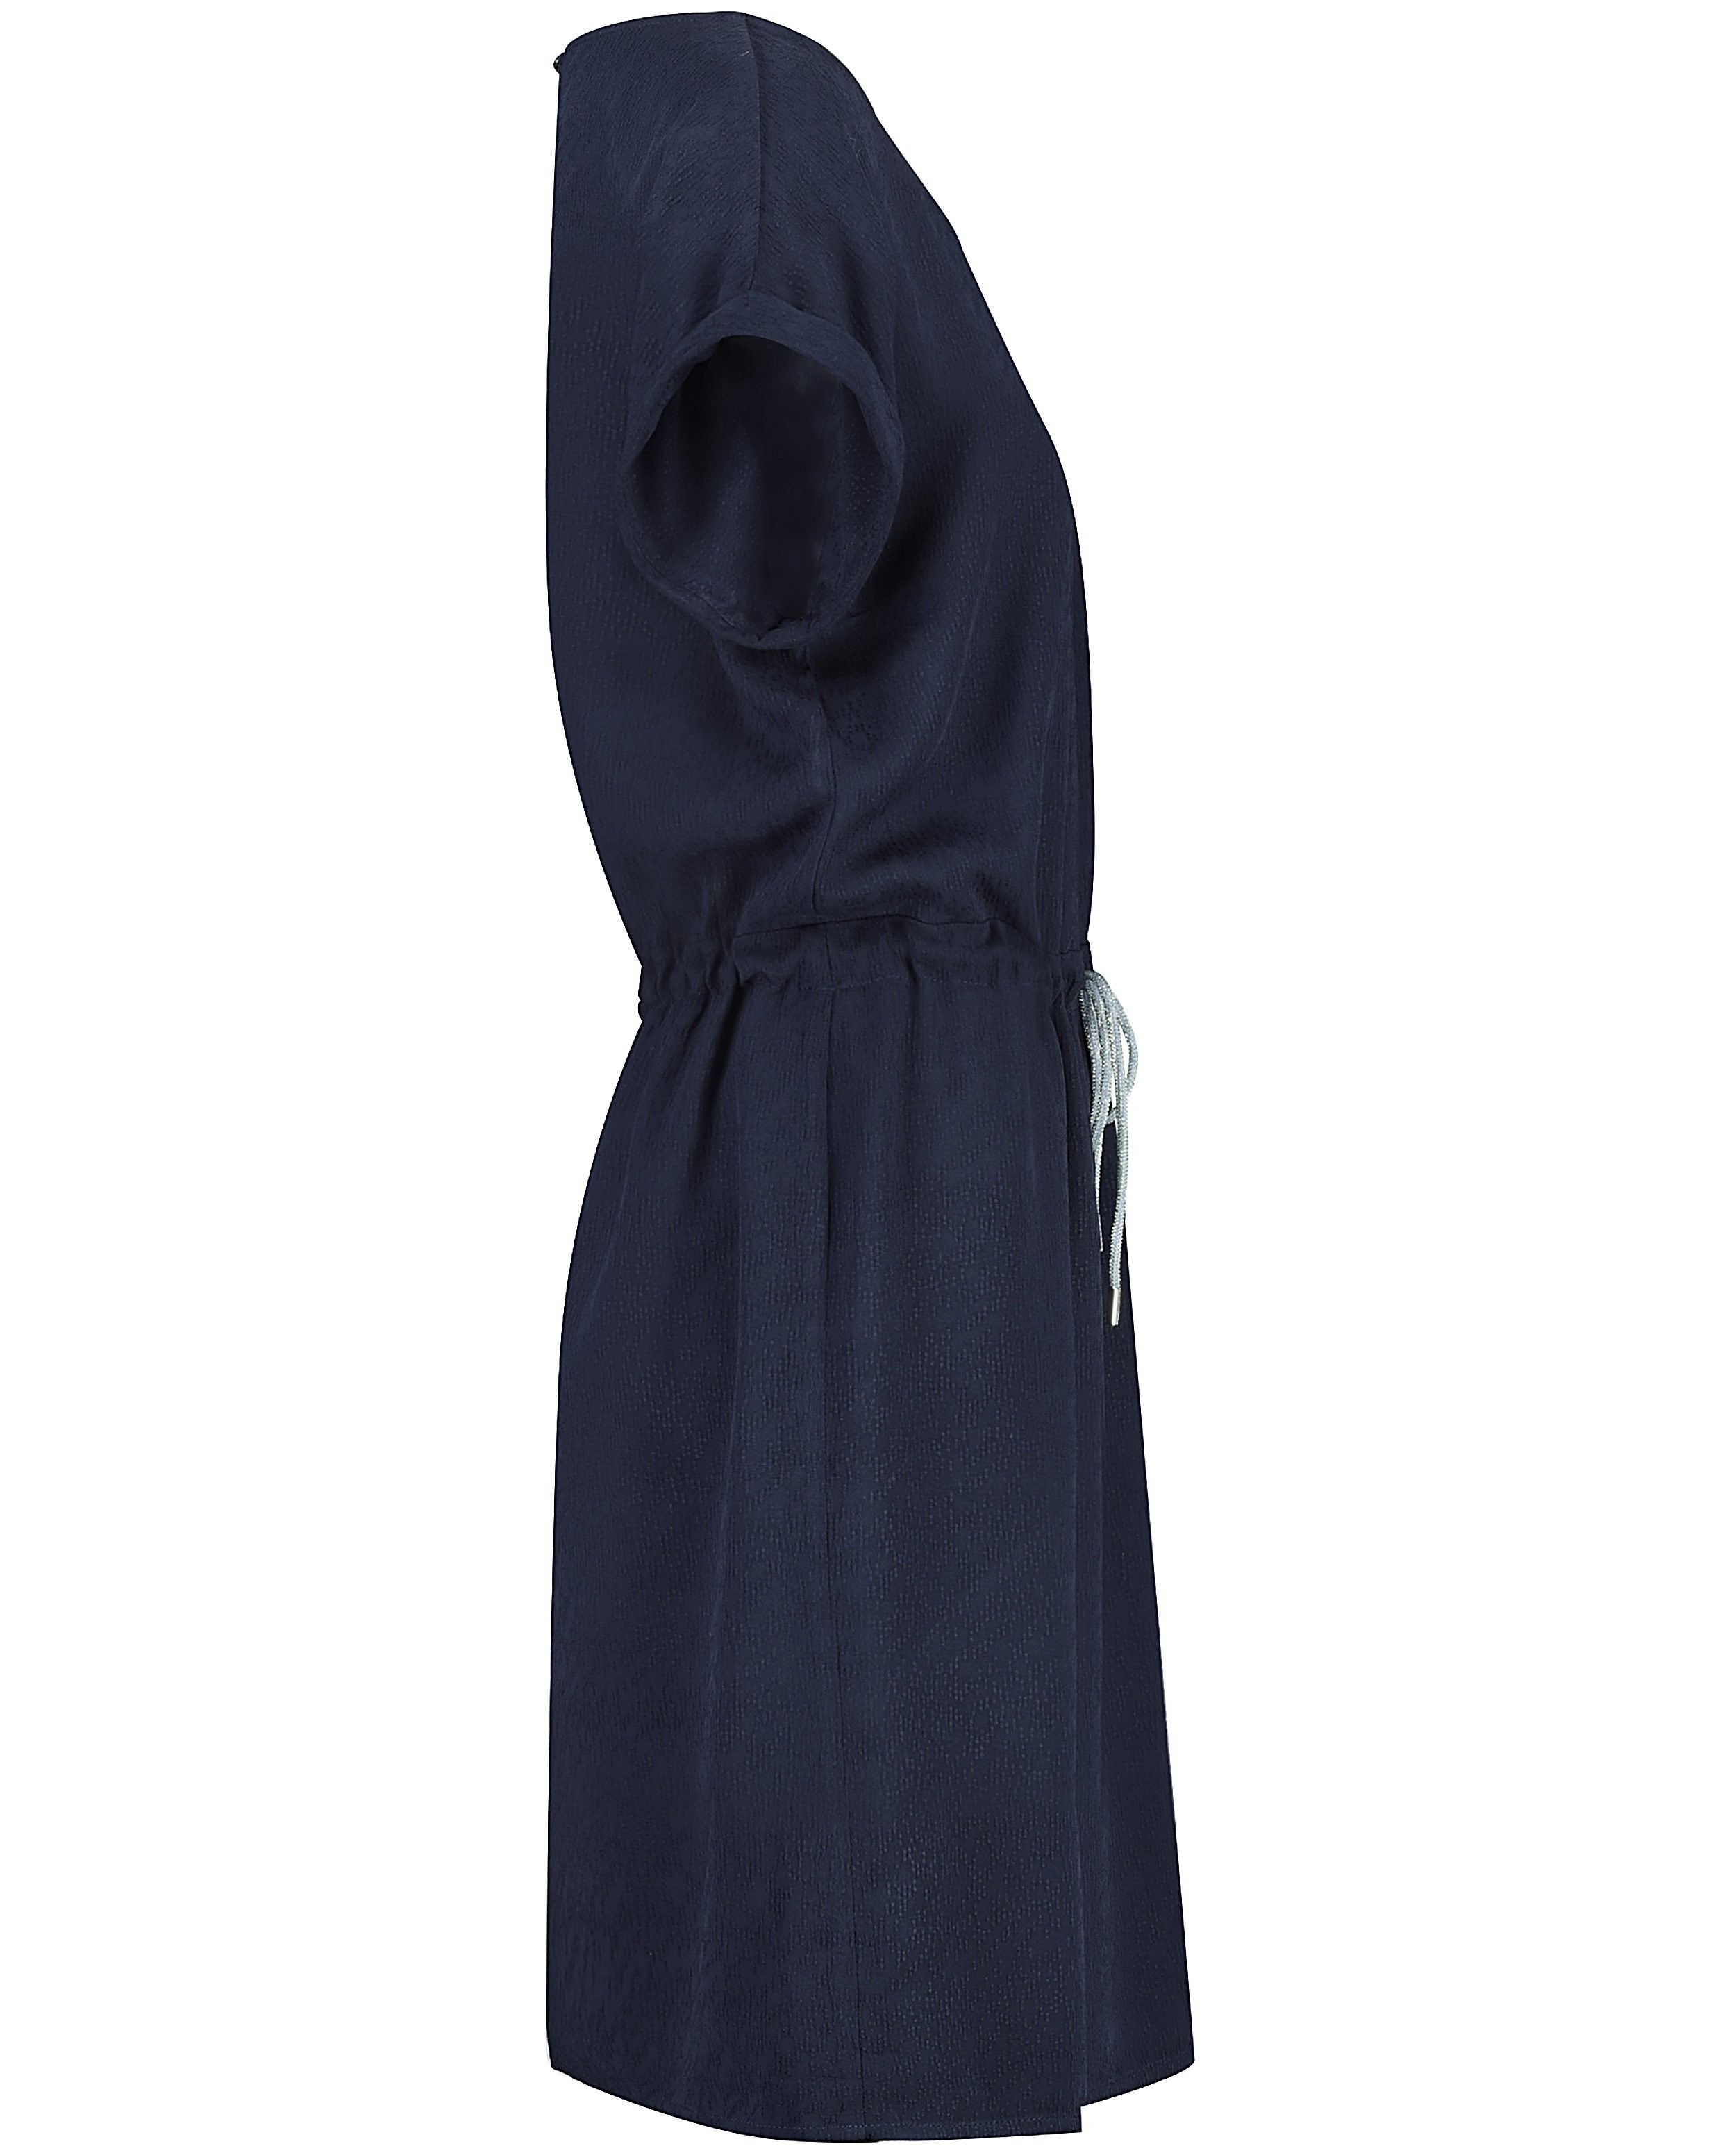 Kleedjes - Donkerblauwe jurk